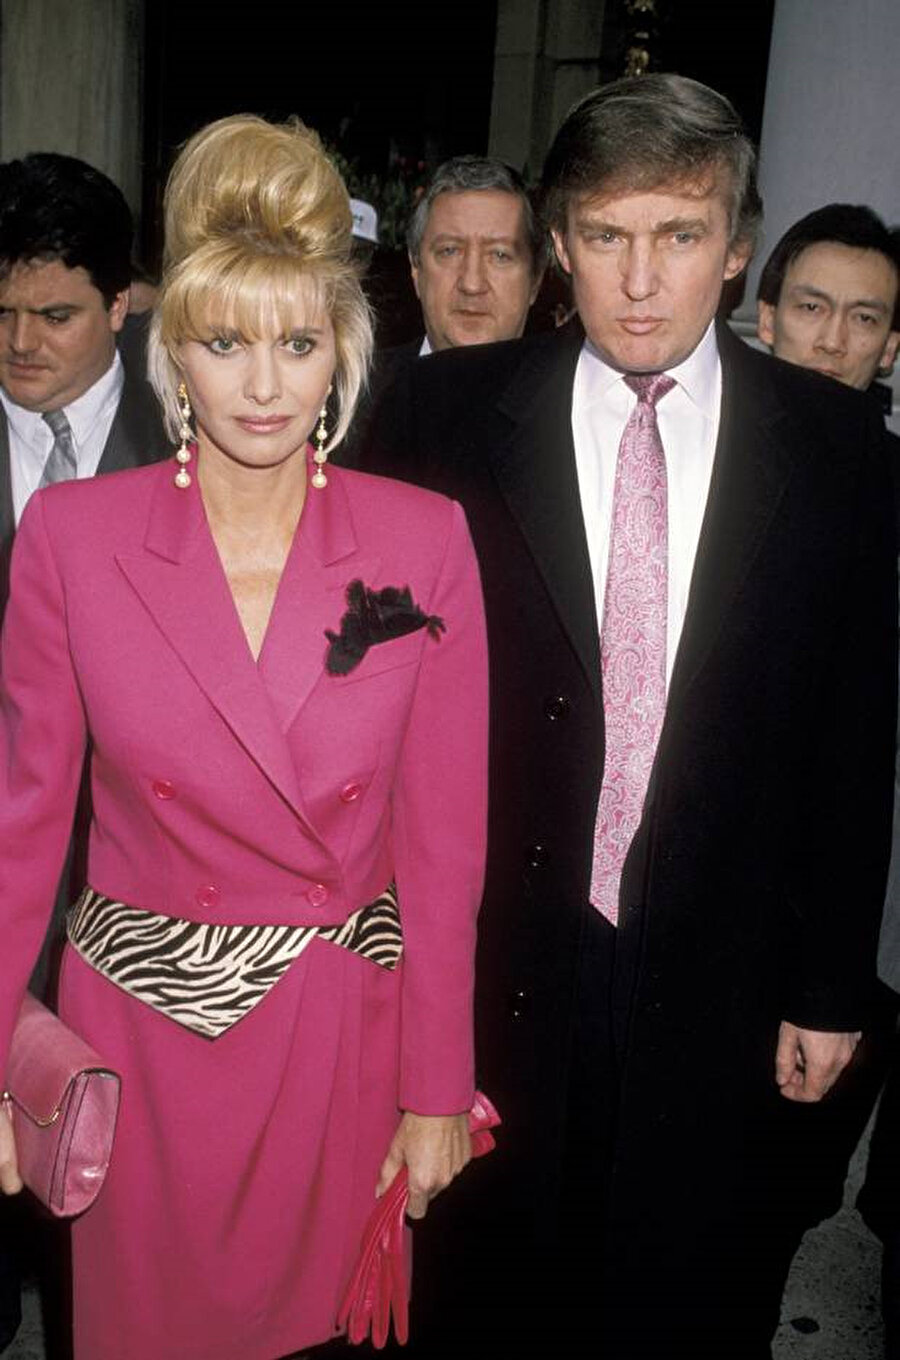 Ivana Zelnickova ve Donald Trump